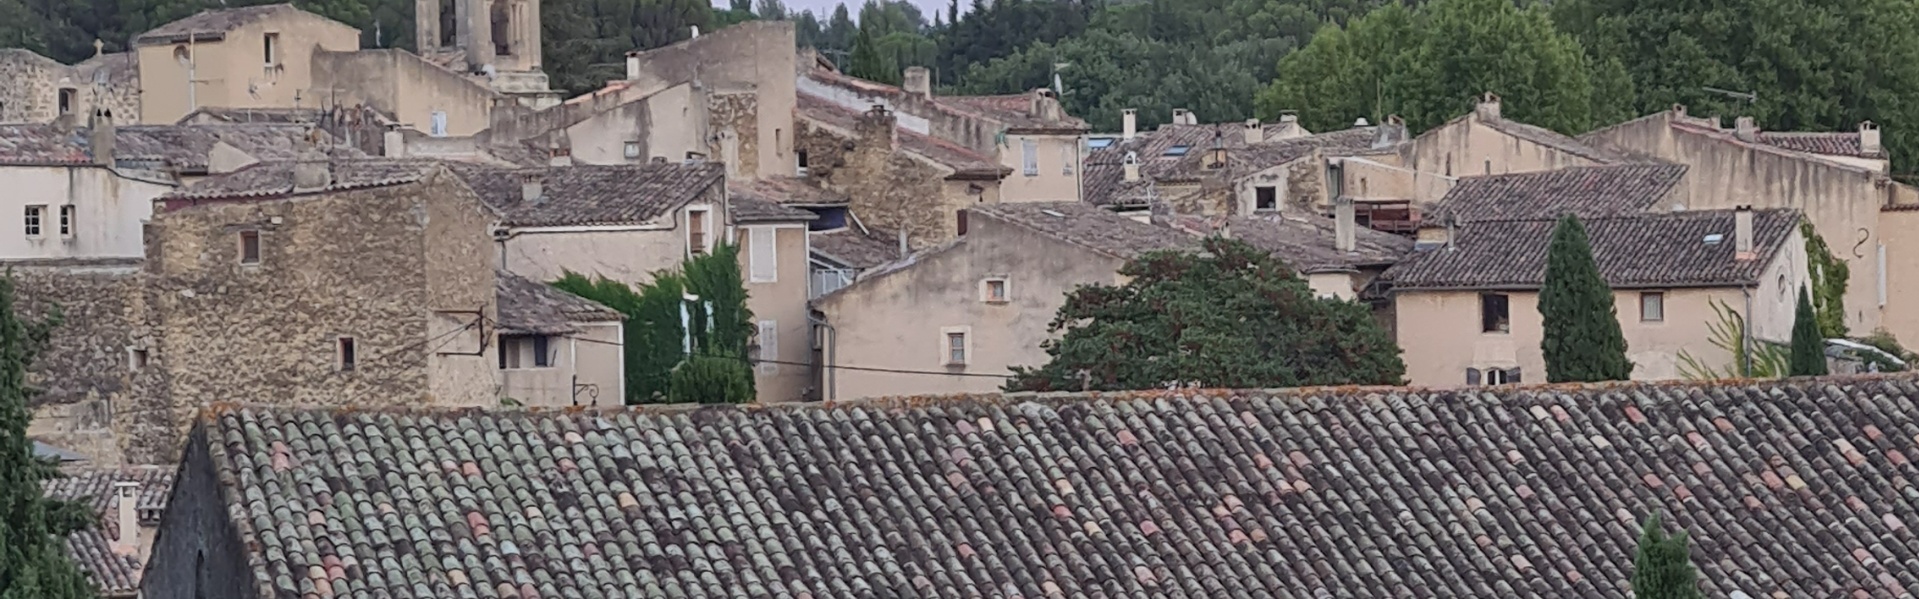 Le Château de Lourmarin, Luberon en Provence